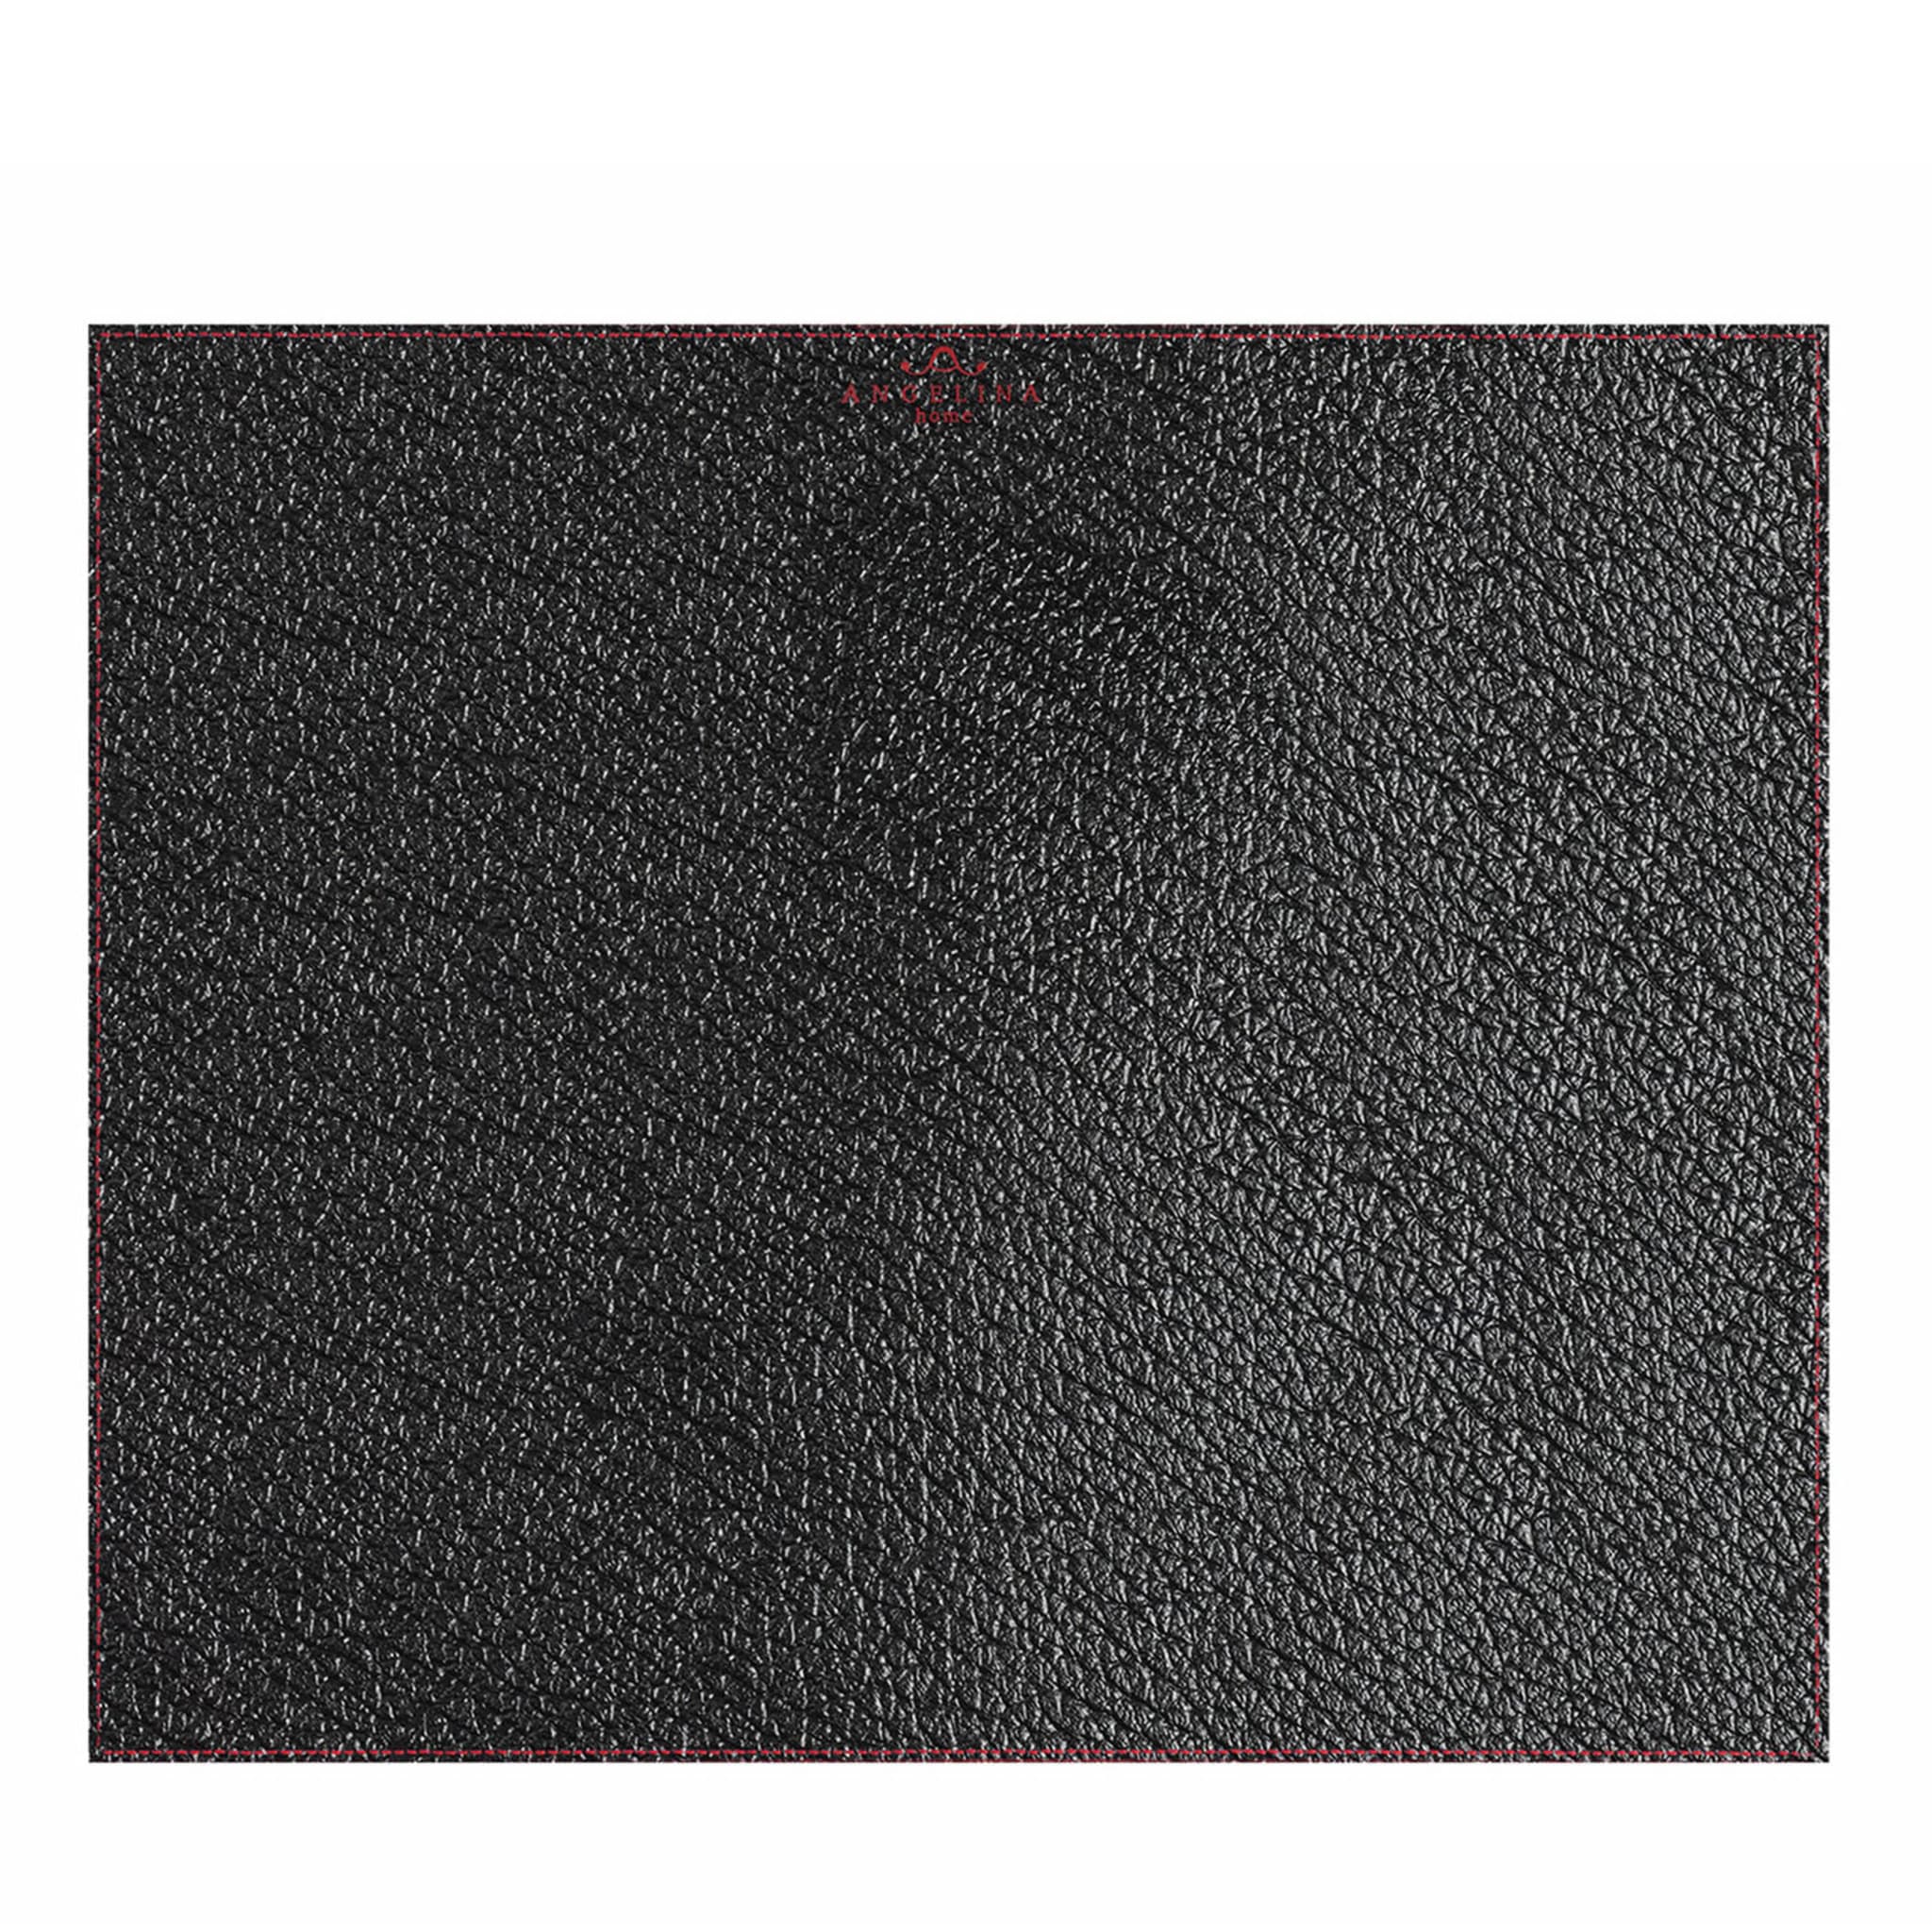 Tanzania Medium Set of 2 Rectangular Black Leather Placemats - Alternative view 1